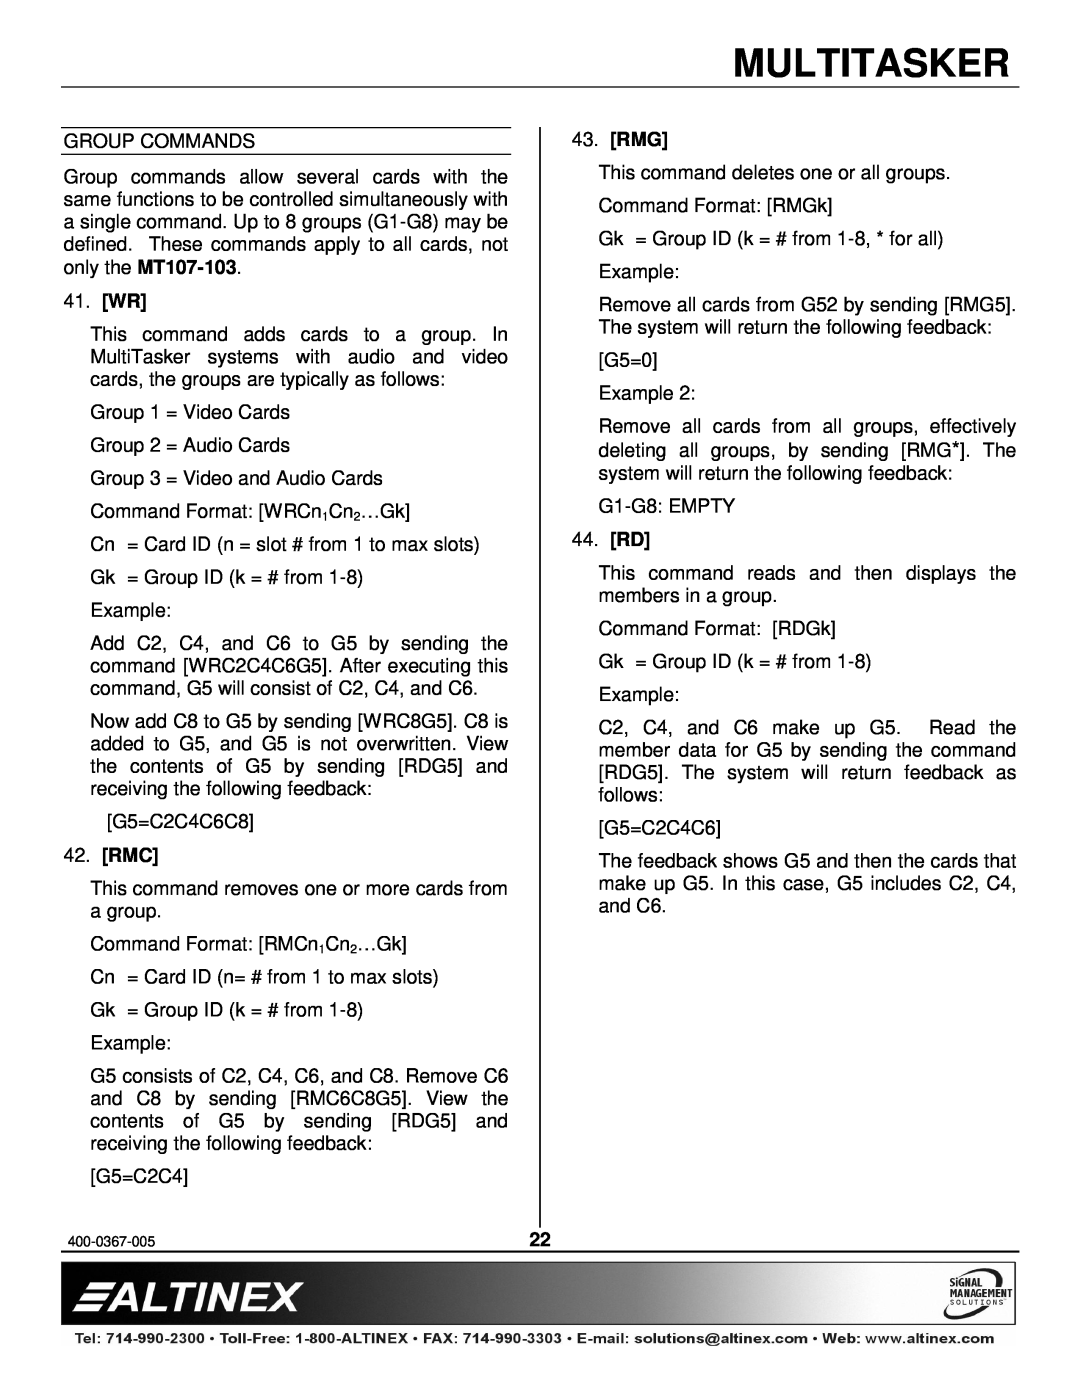 Altinex MT107-103 manual 41. WR, Rmc, Rmg, 44. RD, Multitasker 